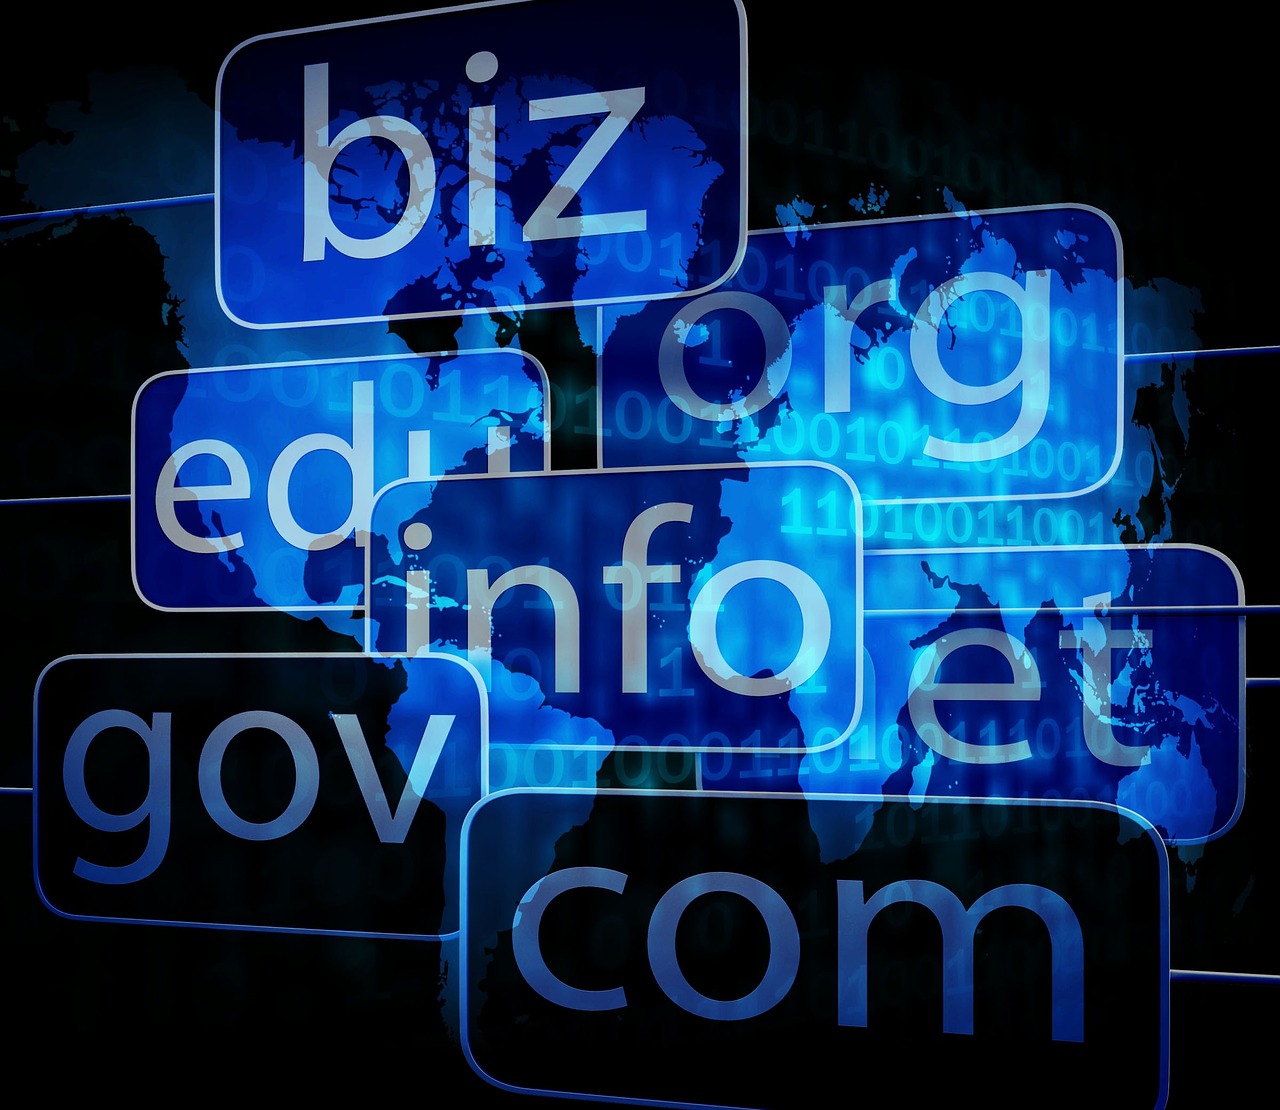 Choosing a domain name